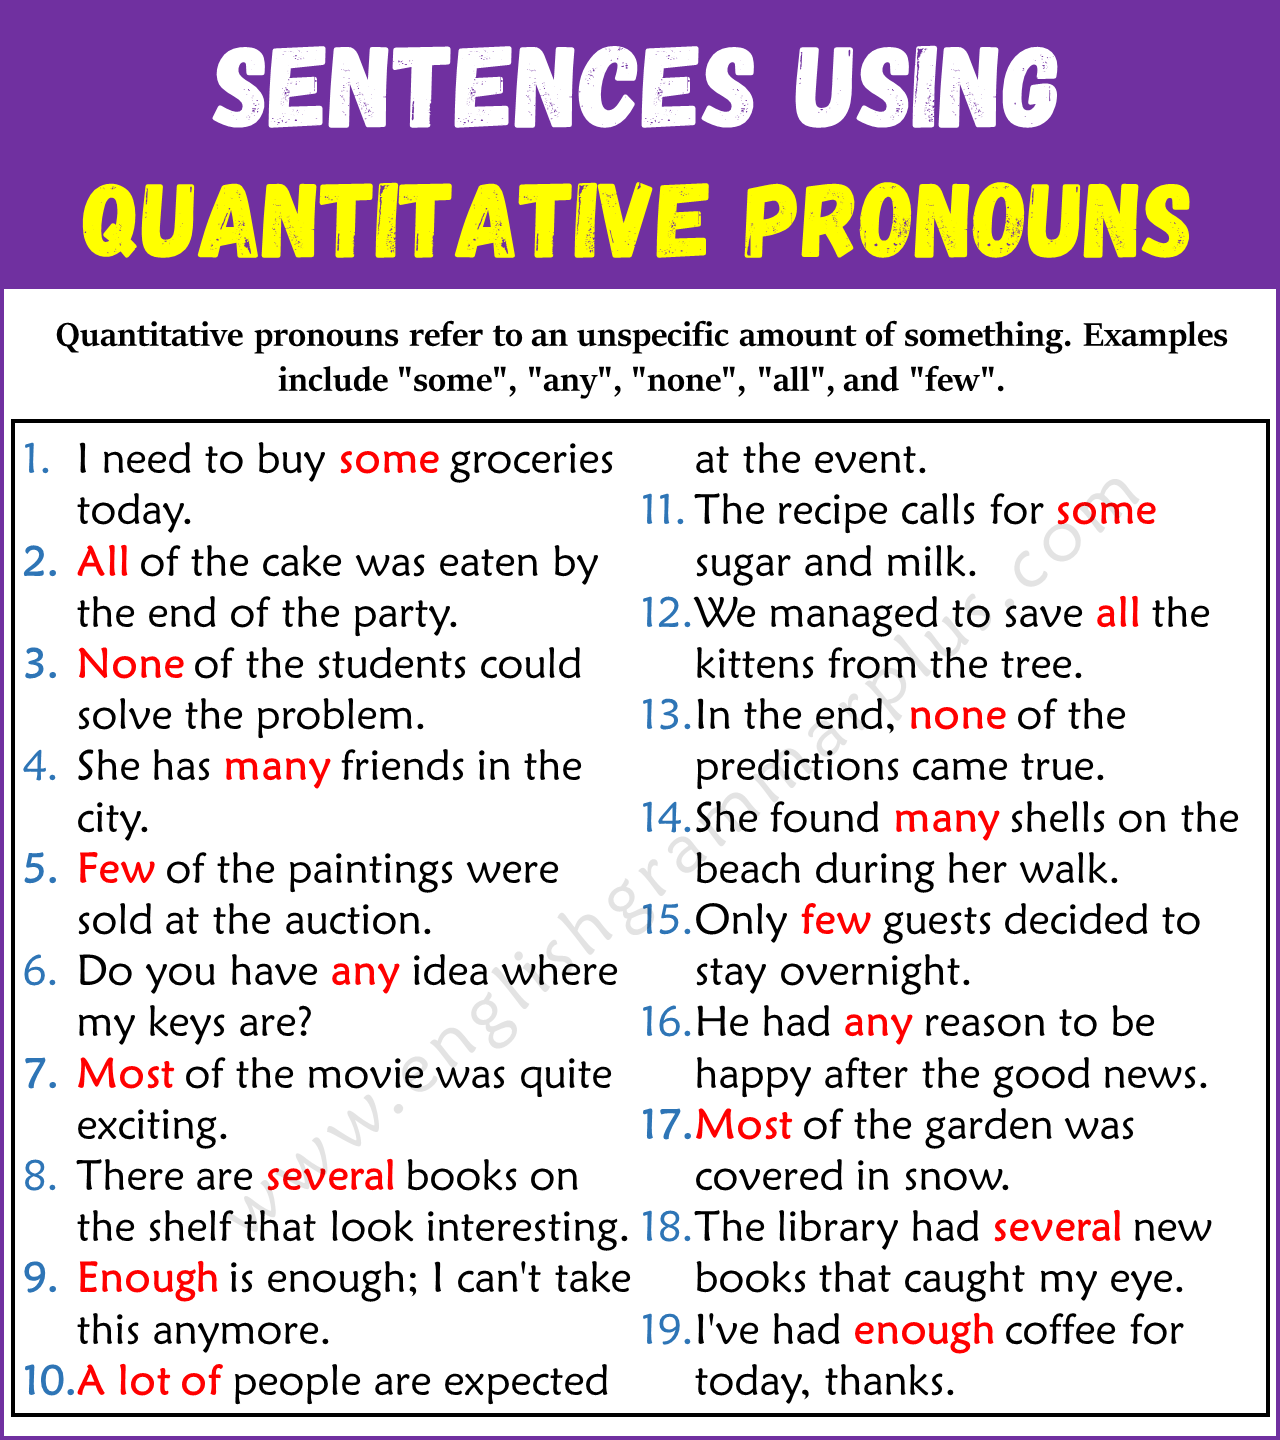 Examples of Quantitative Pronouns in Sentences